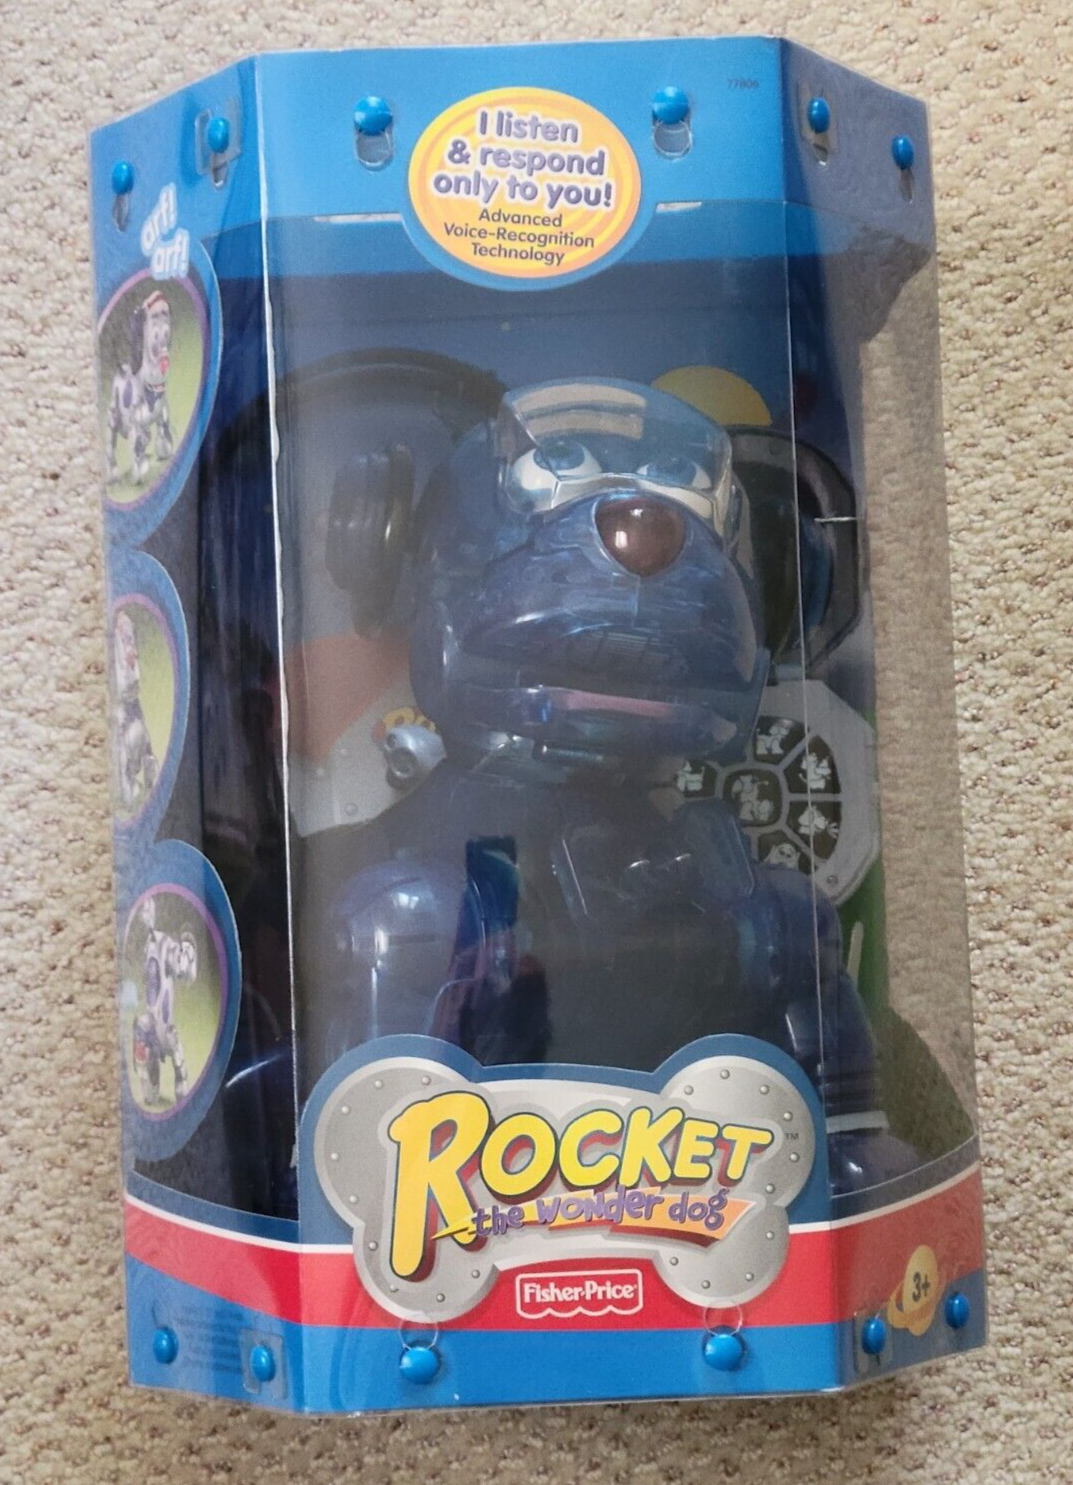 A boxed blue prototype Rocket the Wonder Dog